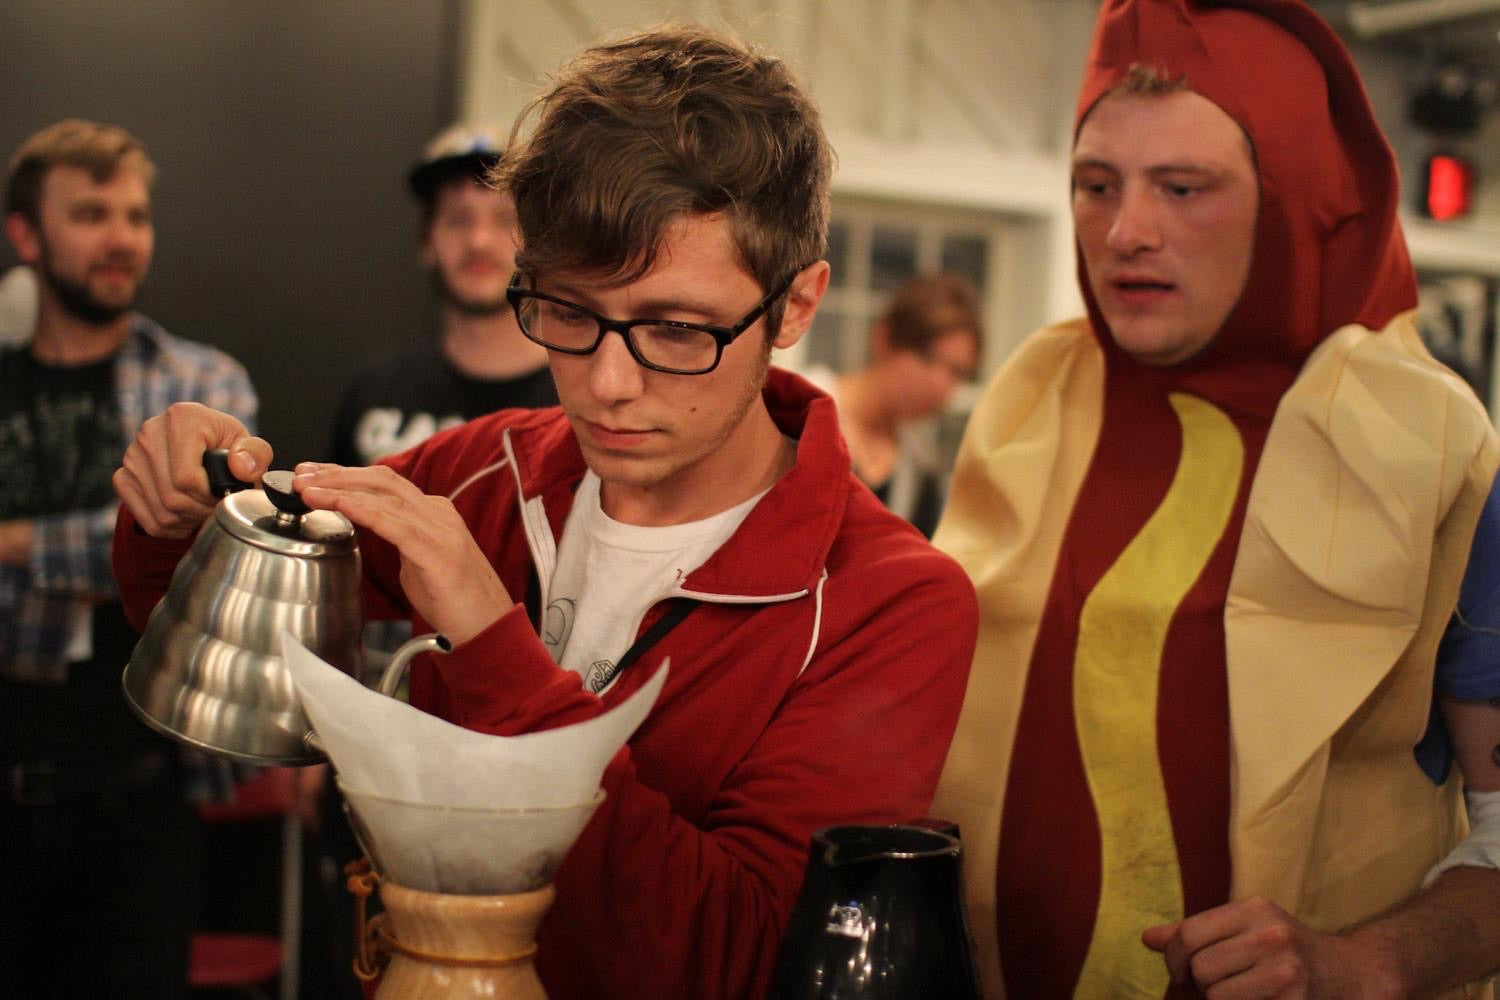 Michael brewing a Chemex at Barista Camp alongside a human hot dog.